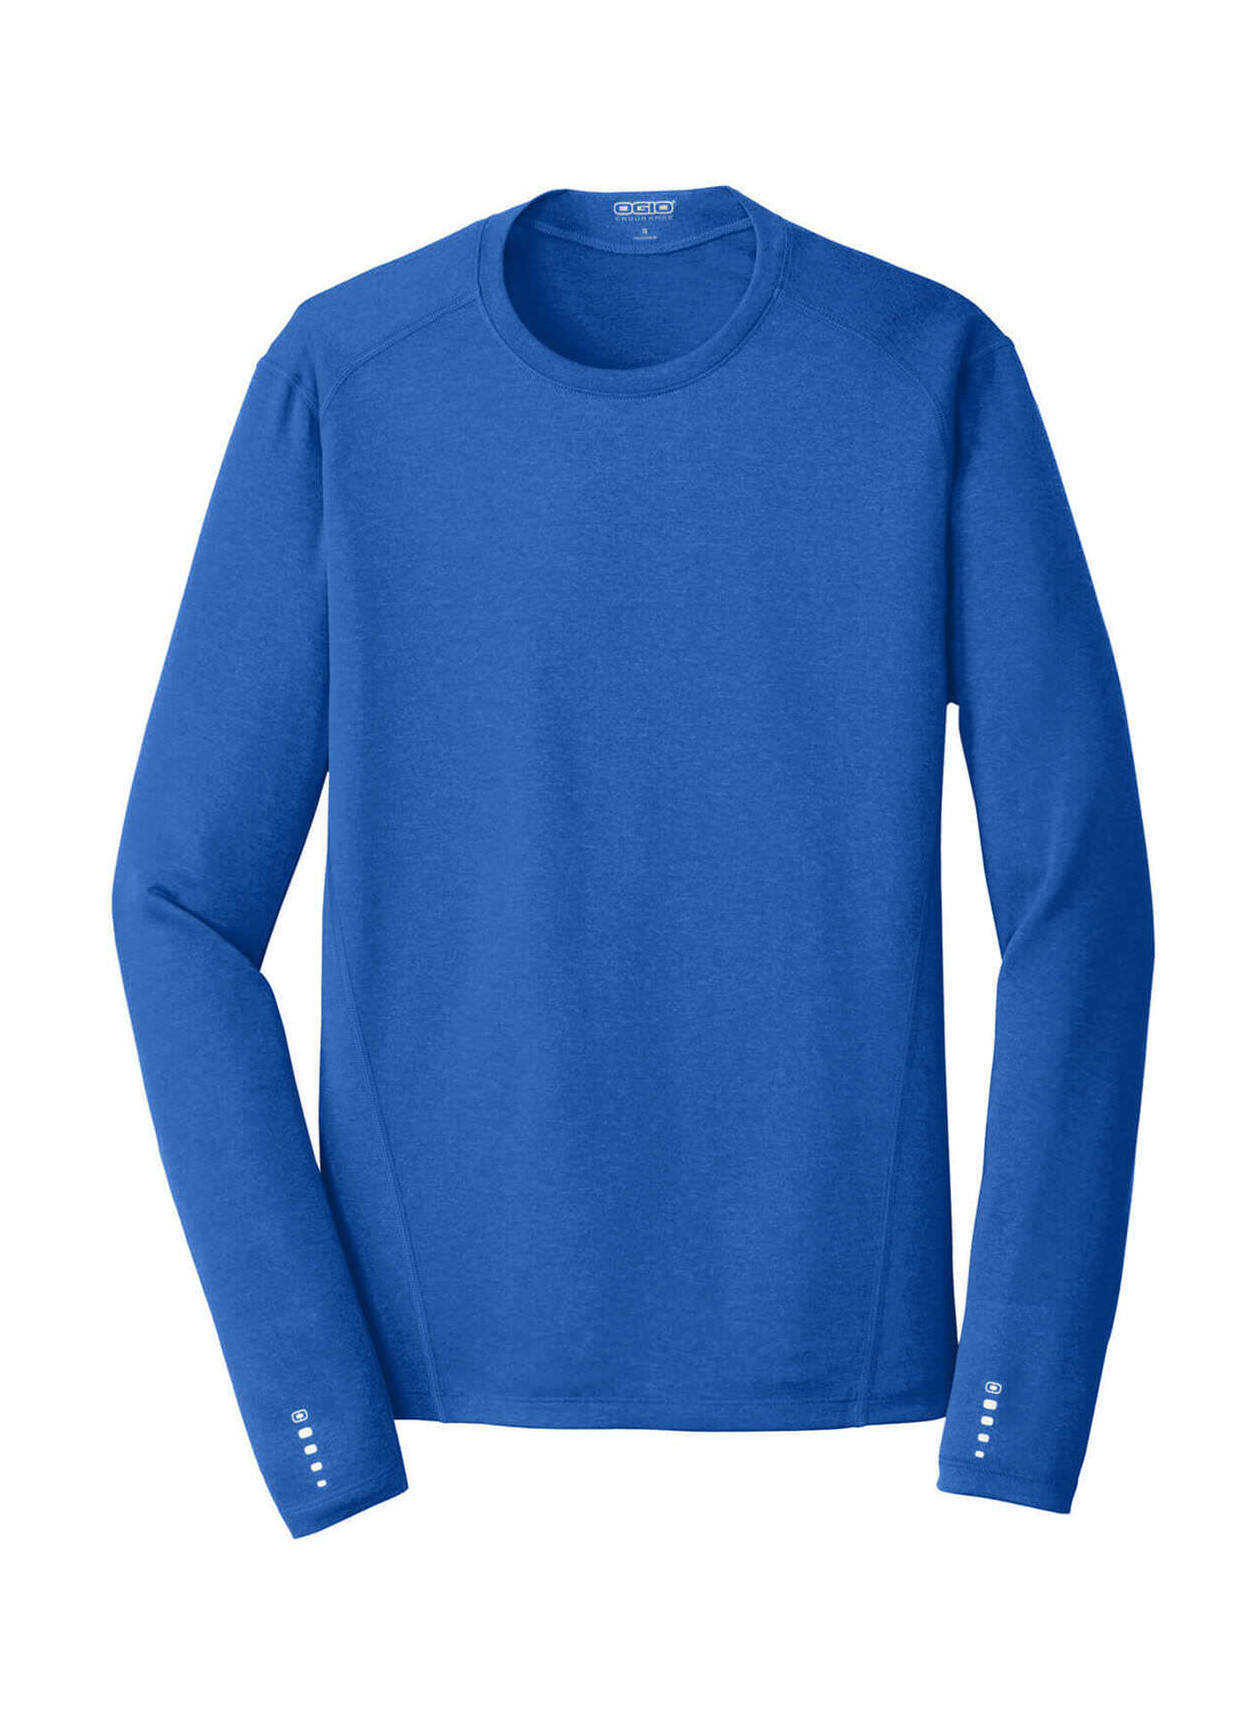 OGIO Men's Electric Blue Endurance Pulse Crew Long-Sleeve T-Shirt